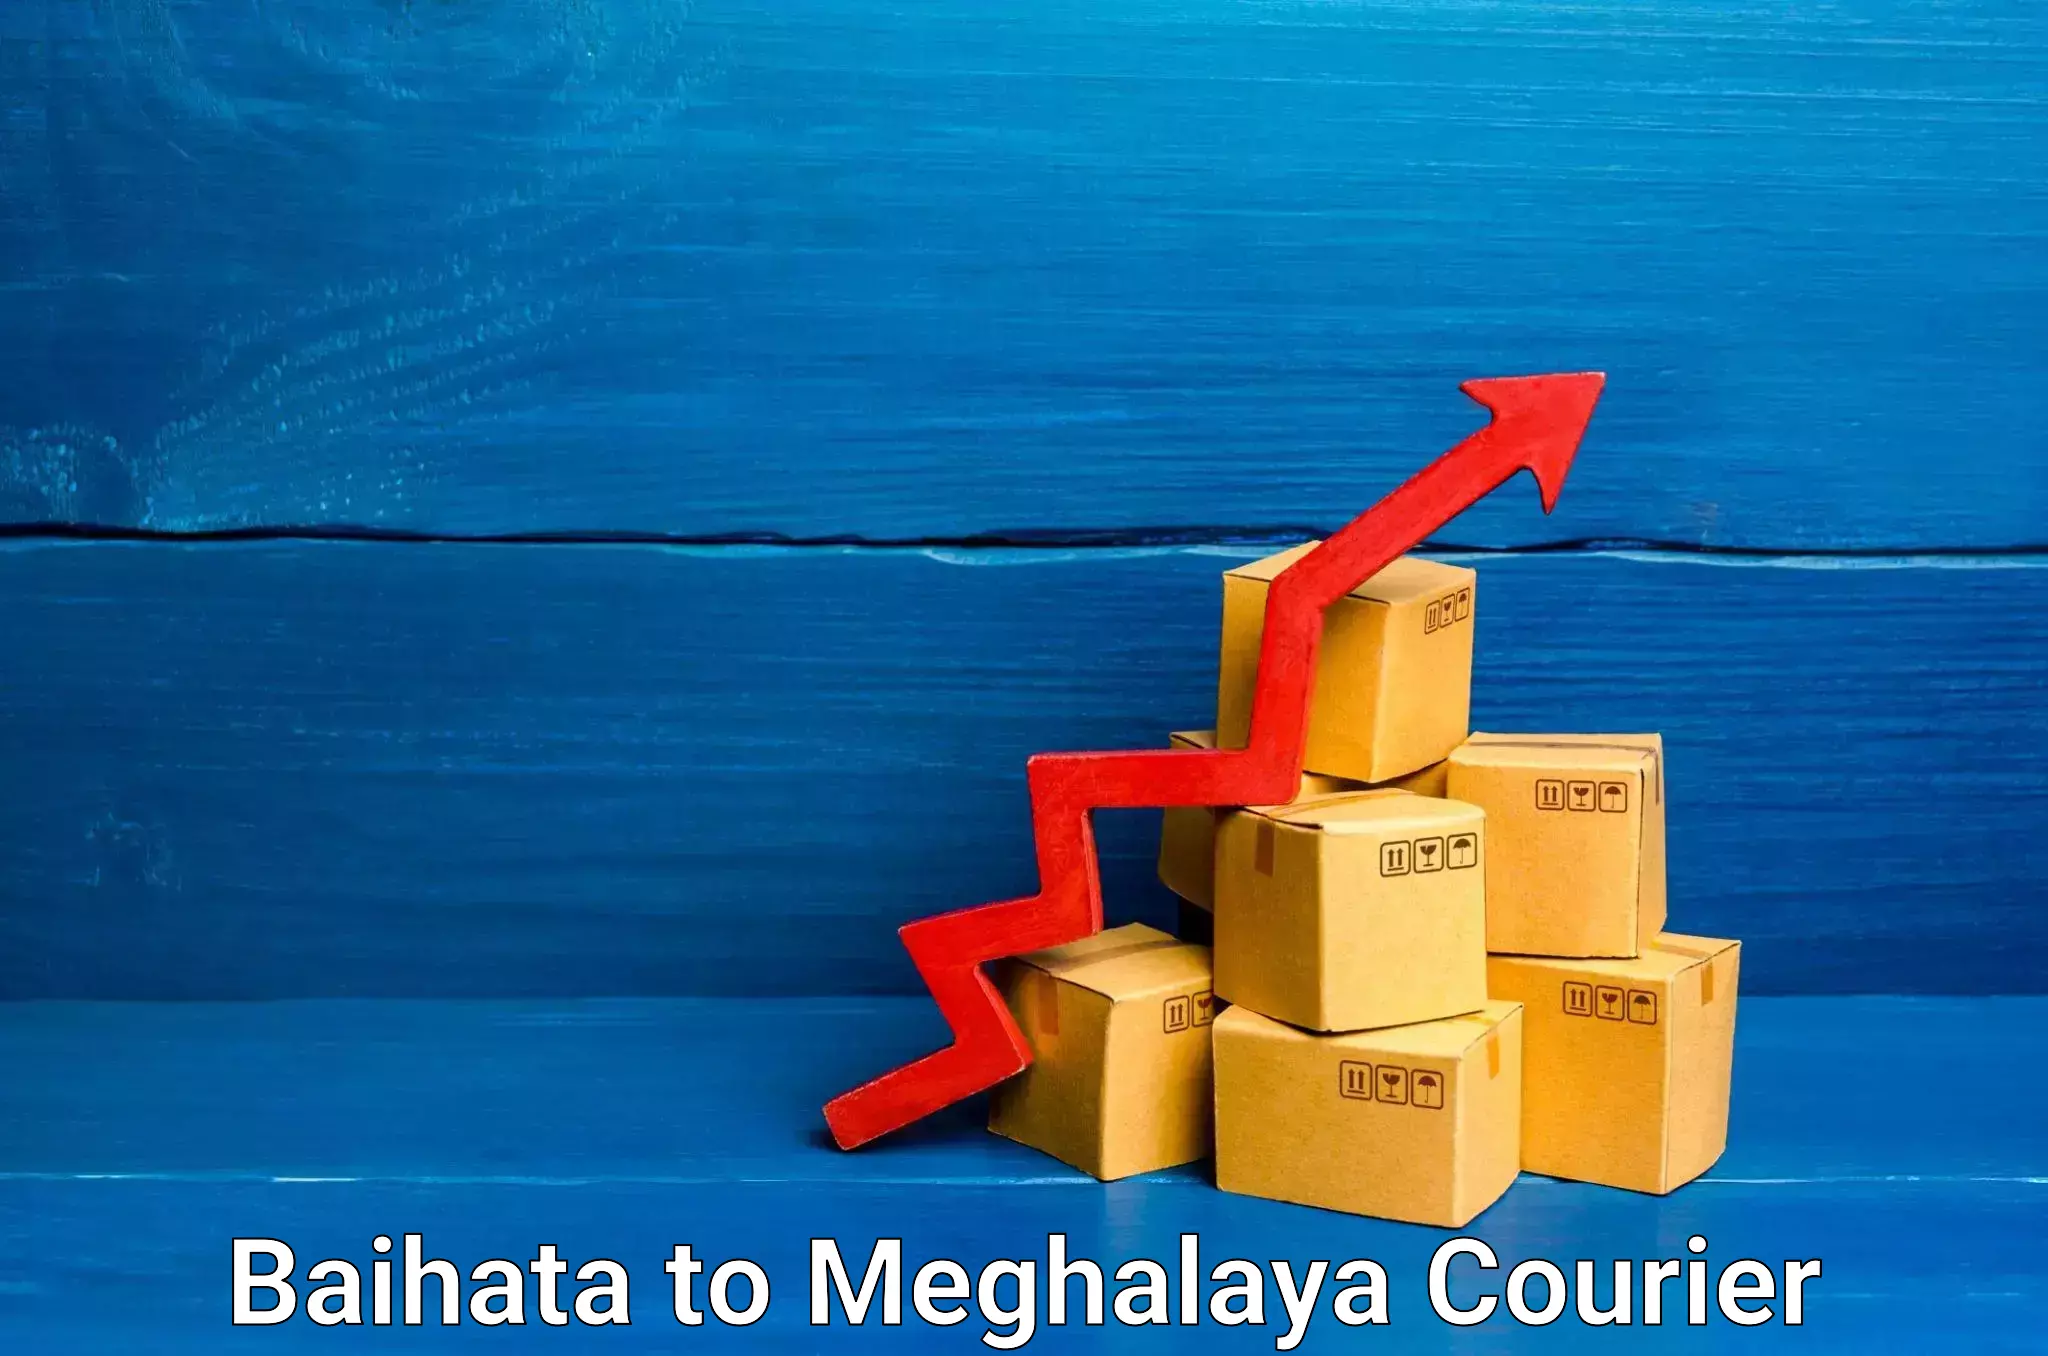 Global logistics network Baihata to Meghalaya